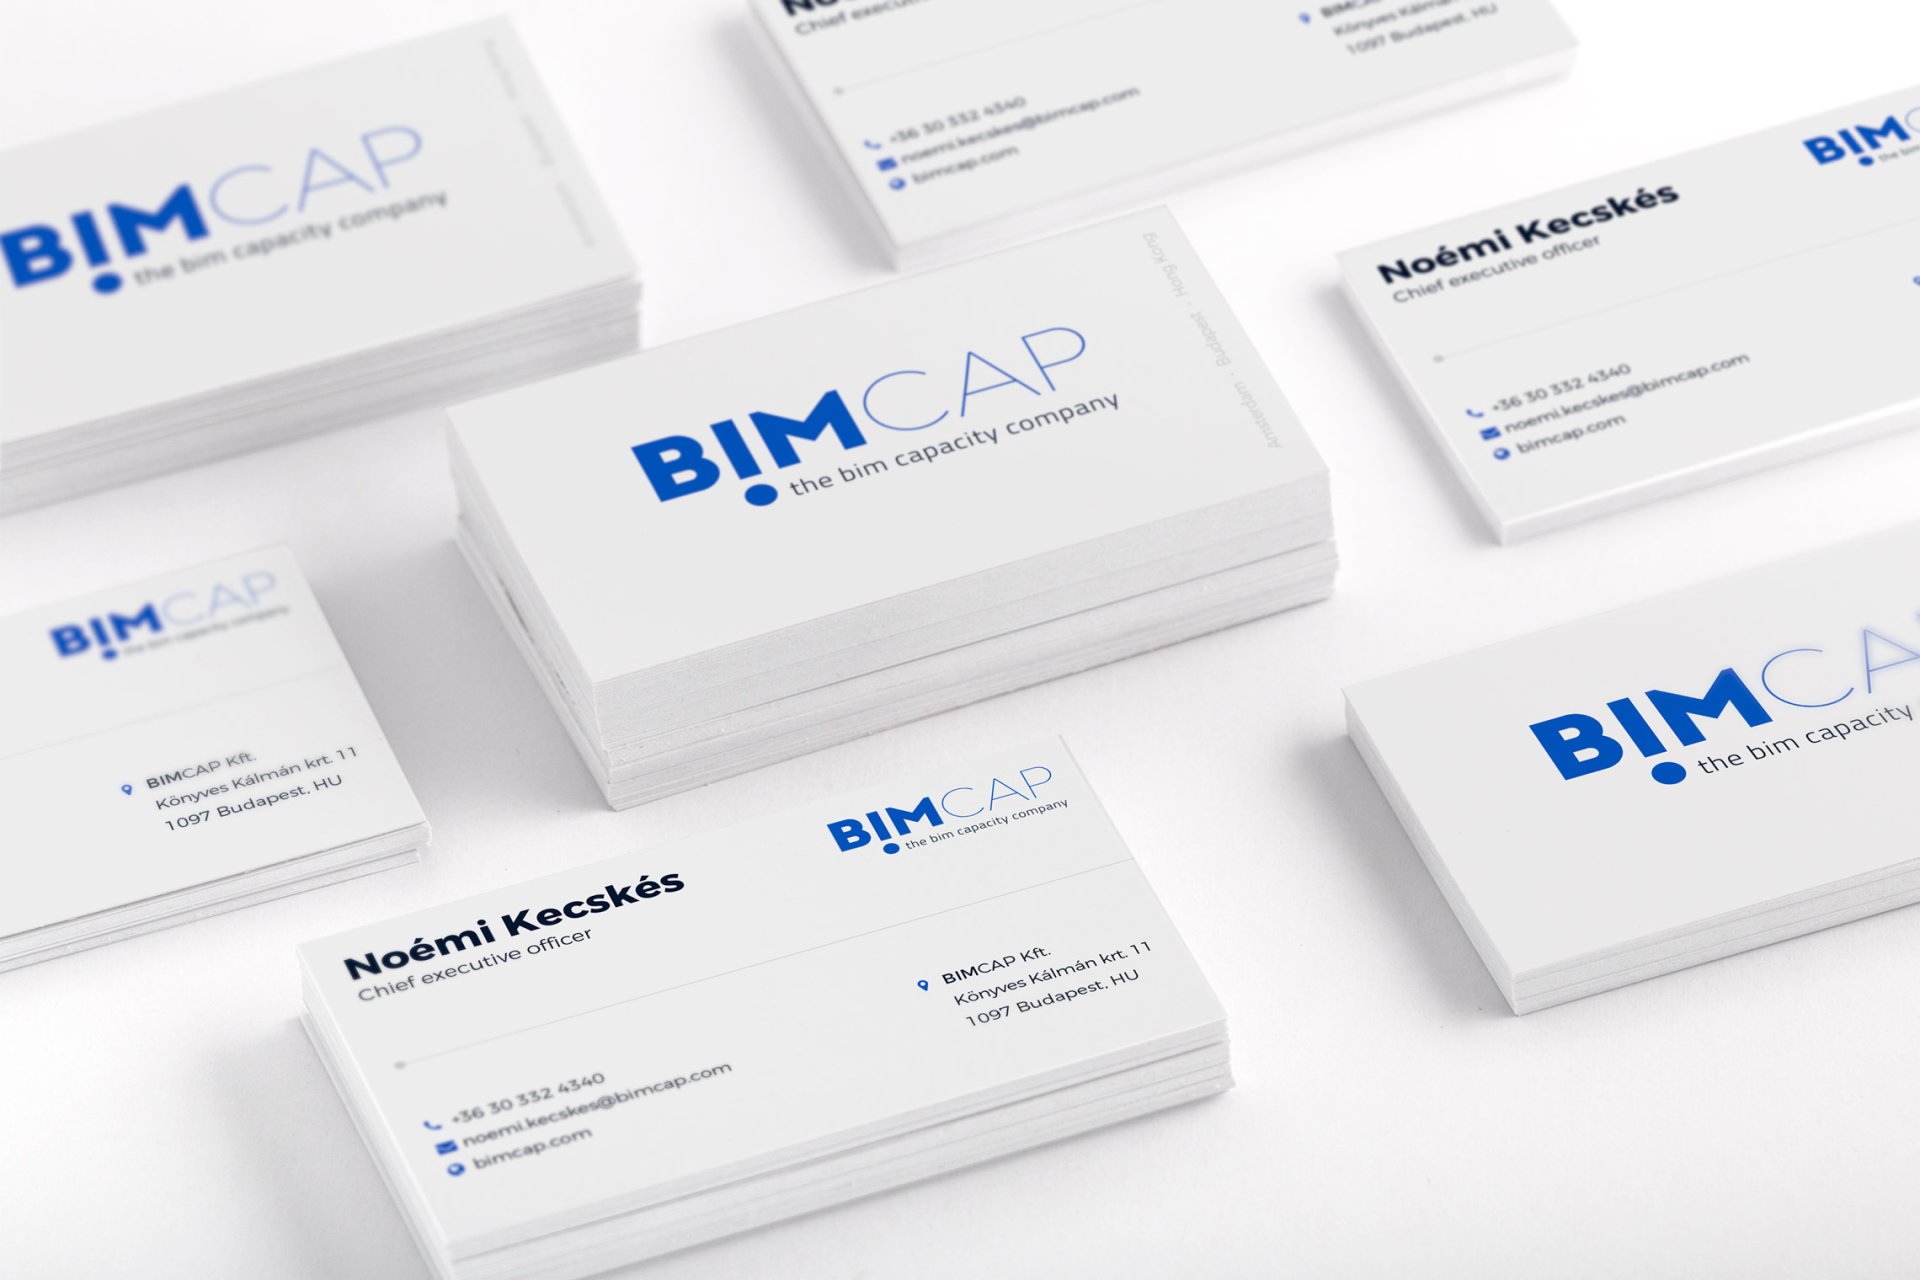 BIMCAP business card back and front design